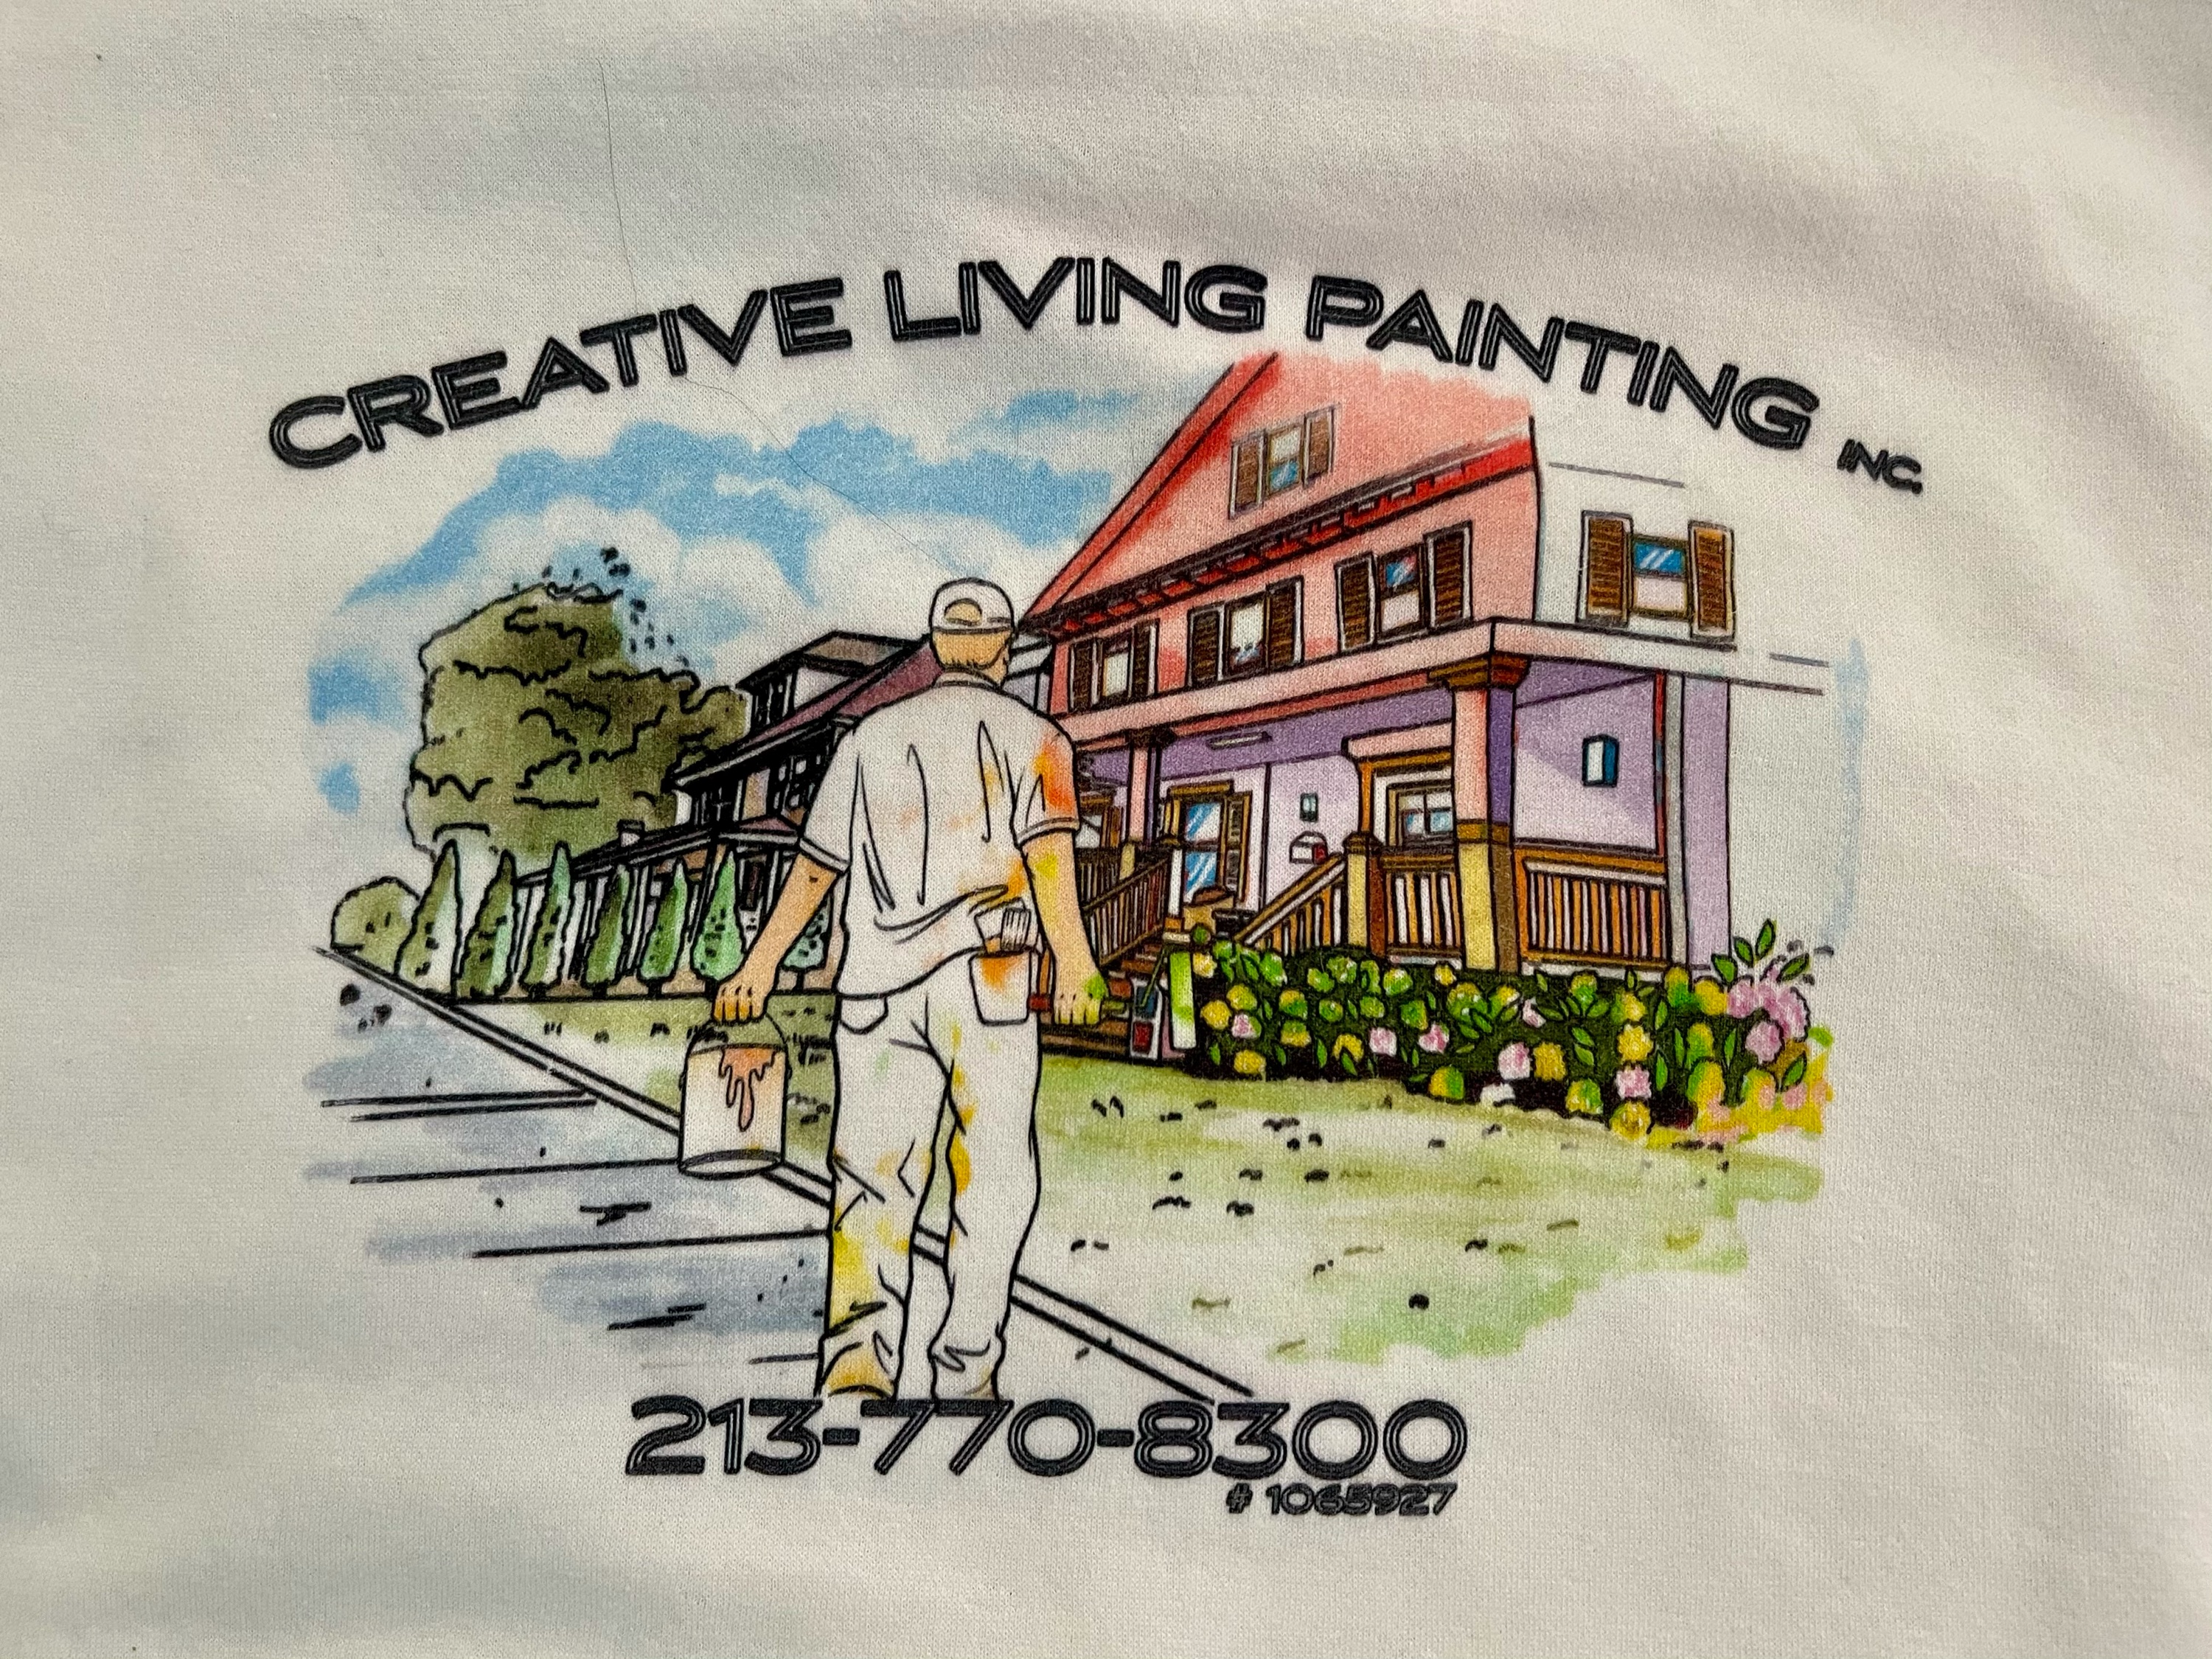 Creative Living Painting Inc. Logo